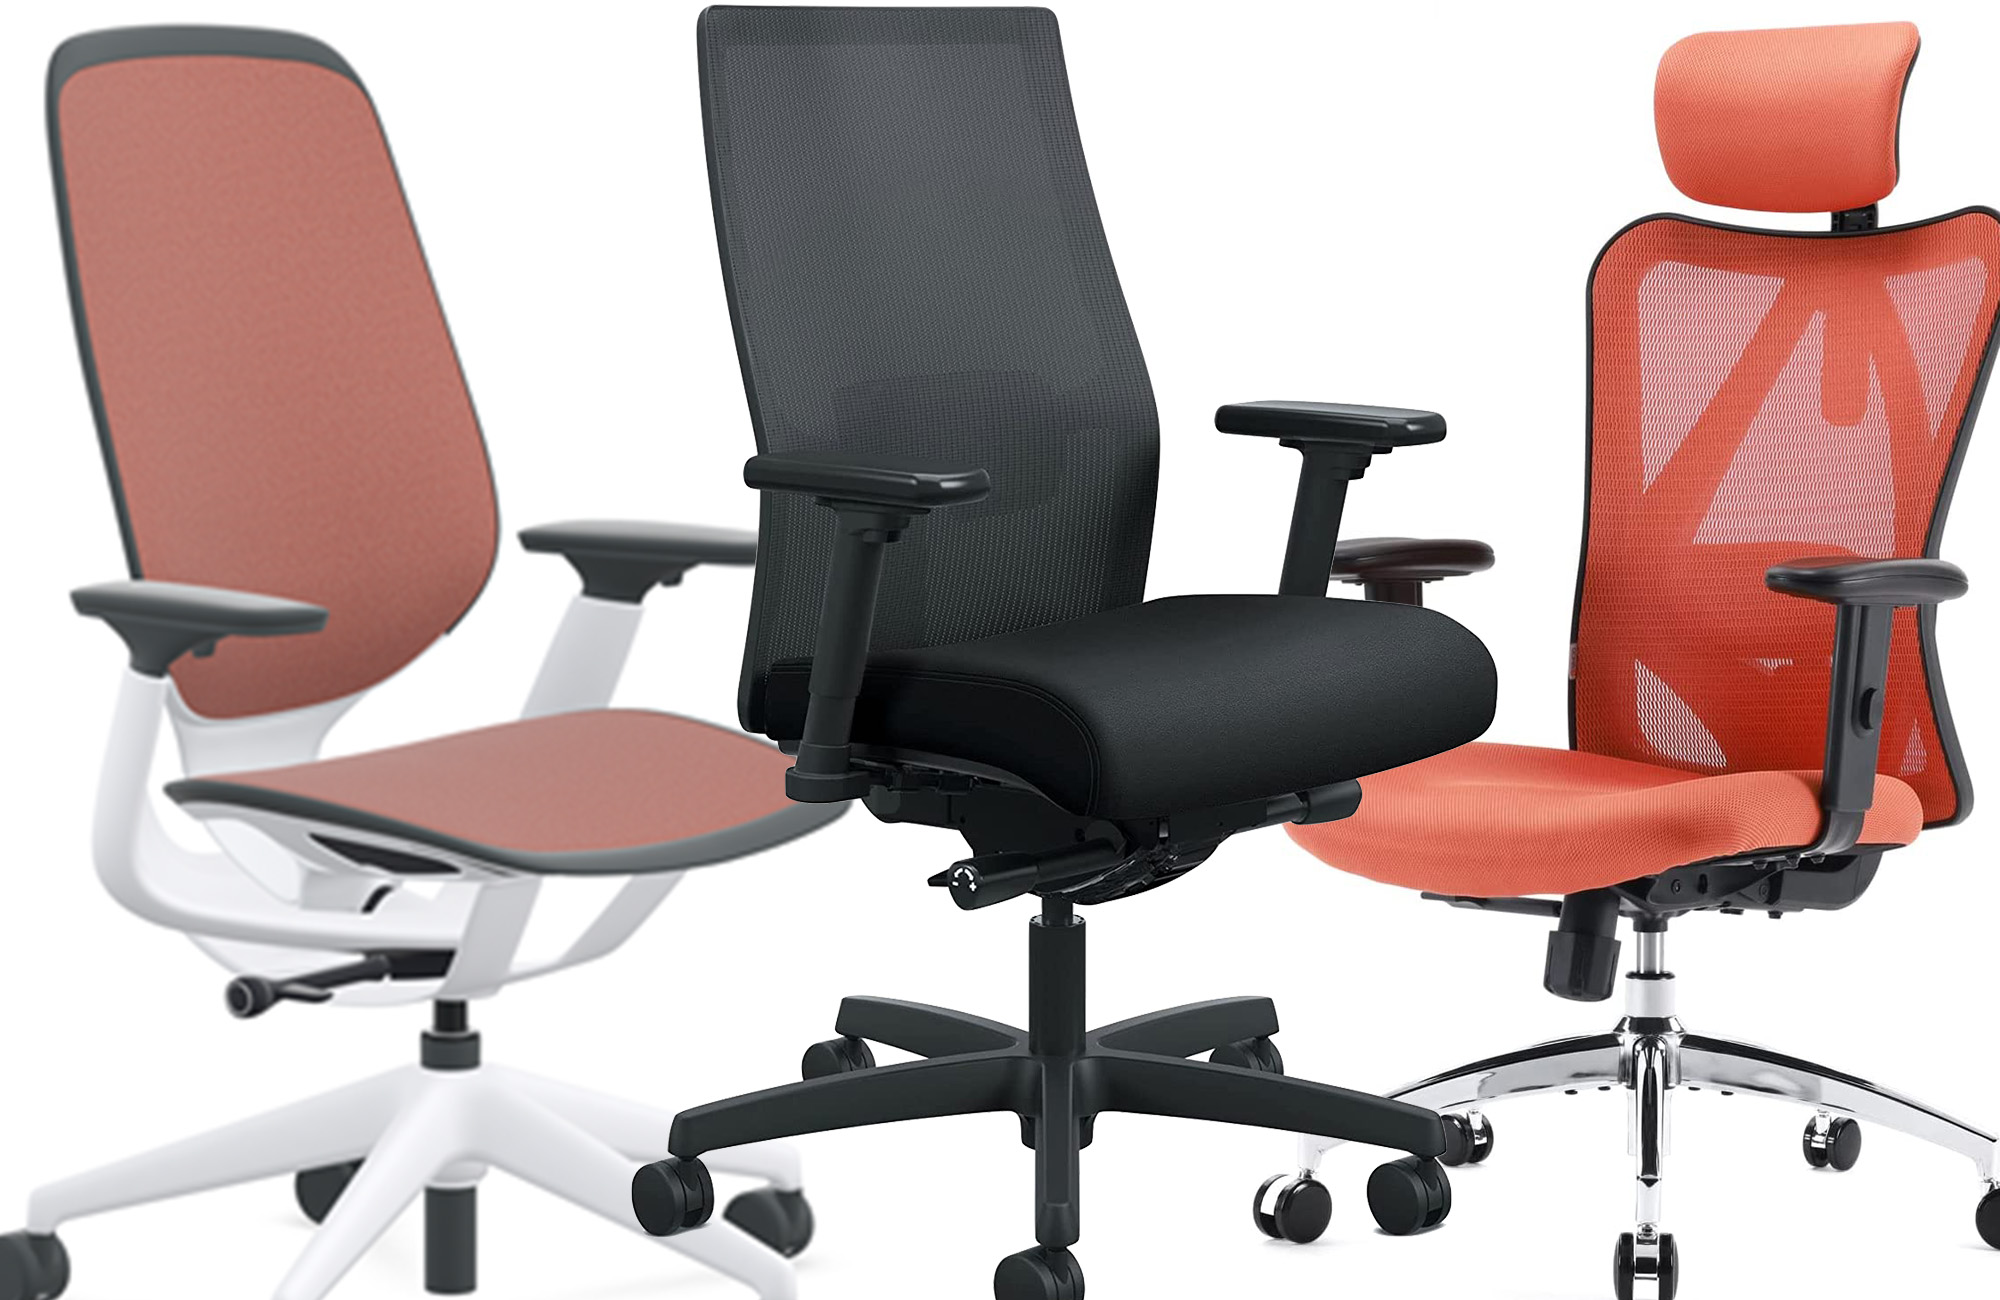 https://www.popsci.com/uploads/2021/05/05/best-ergonomic-chairs.jpg?auto=webp&width=1440&height=936